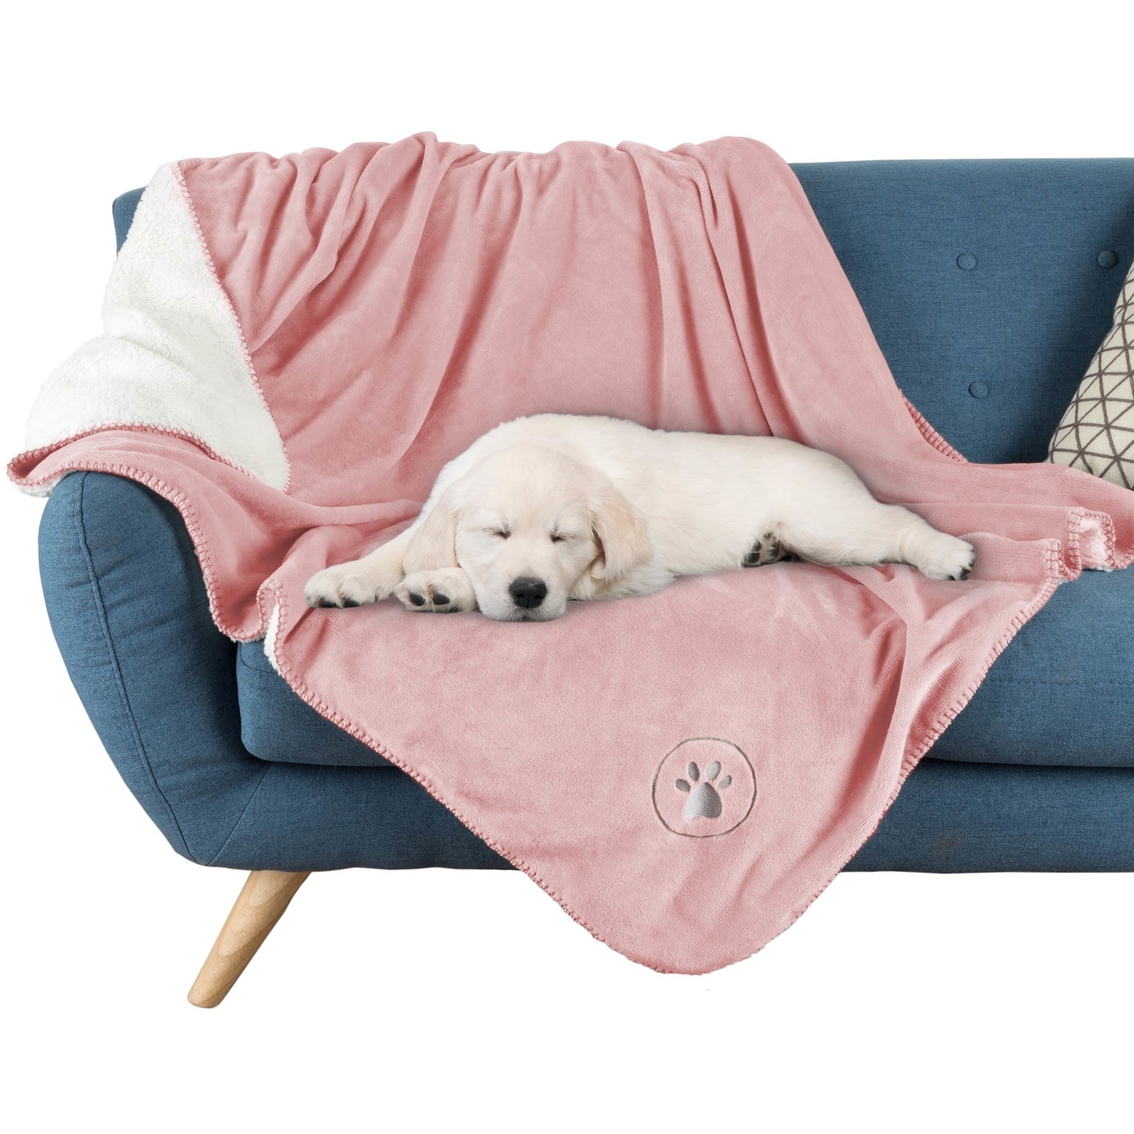 Petmaker Waterproof Soft Plush Throw Pet Blanket 50 x 60 in. - Image 7 of 8